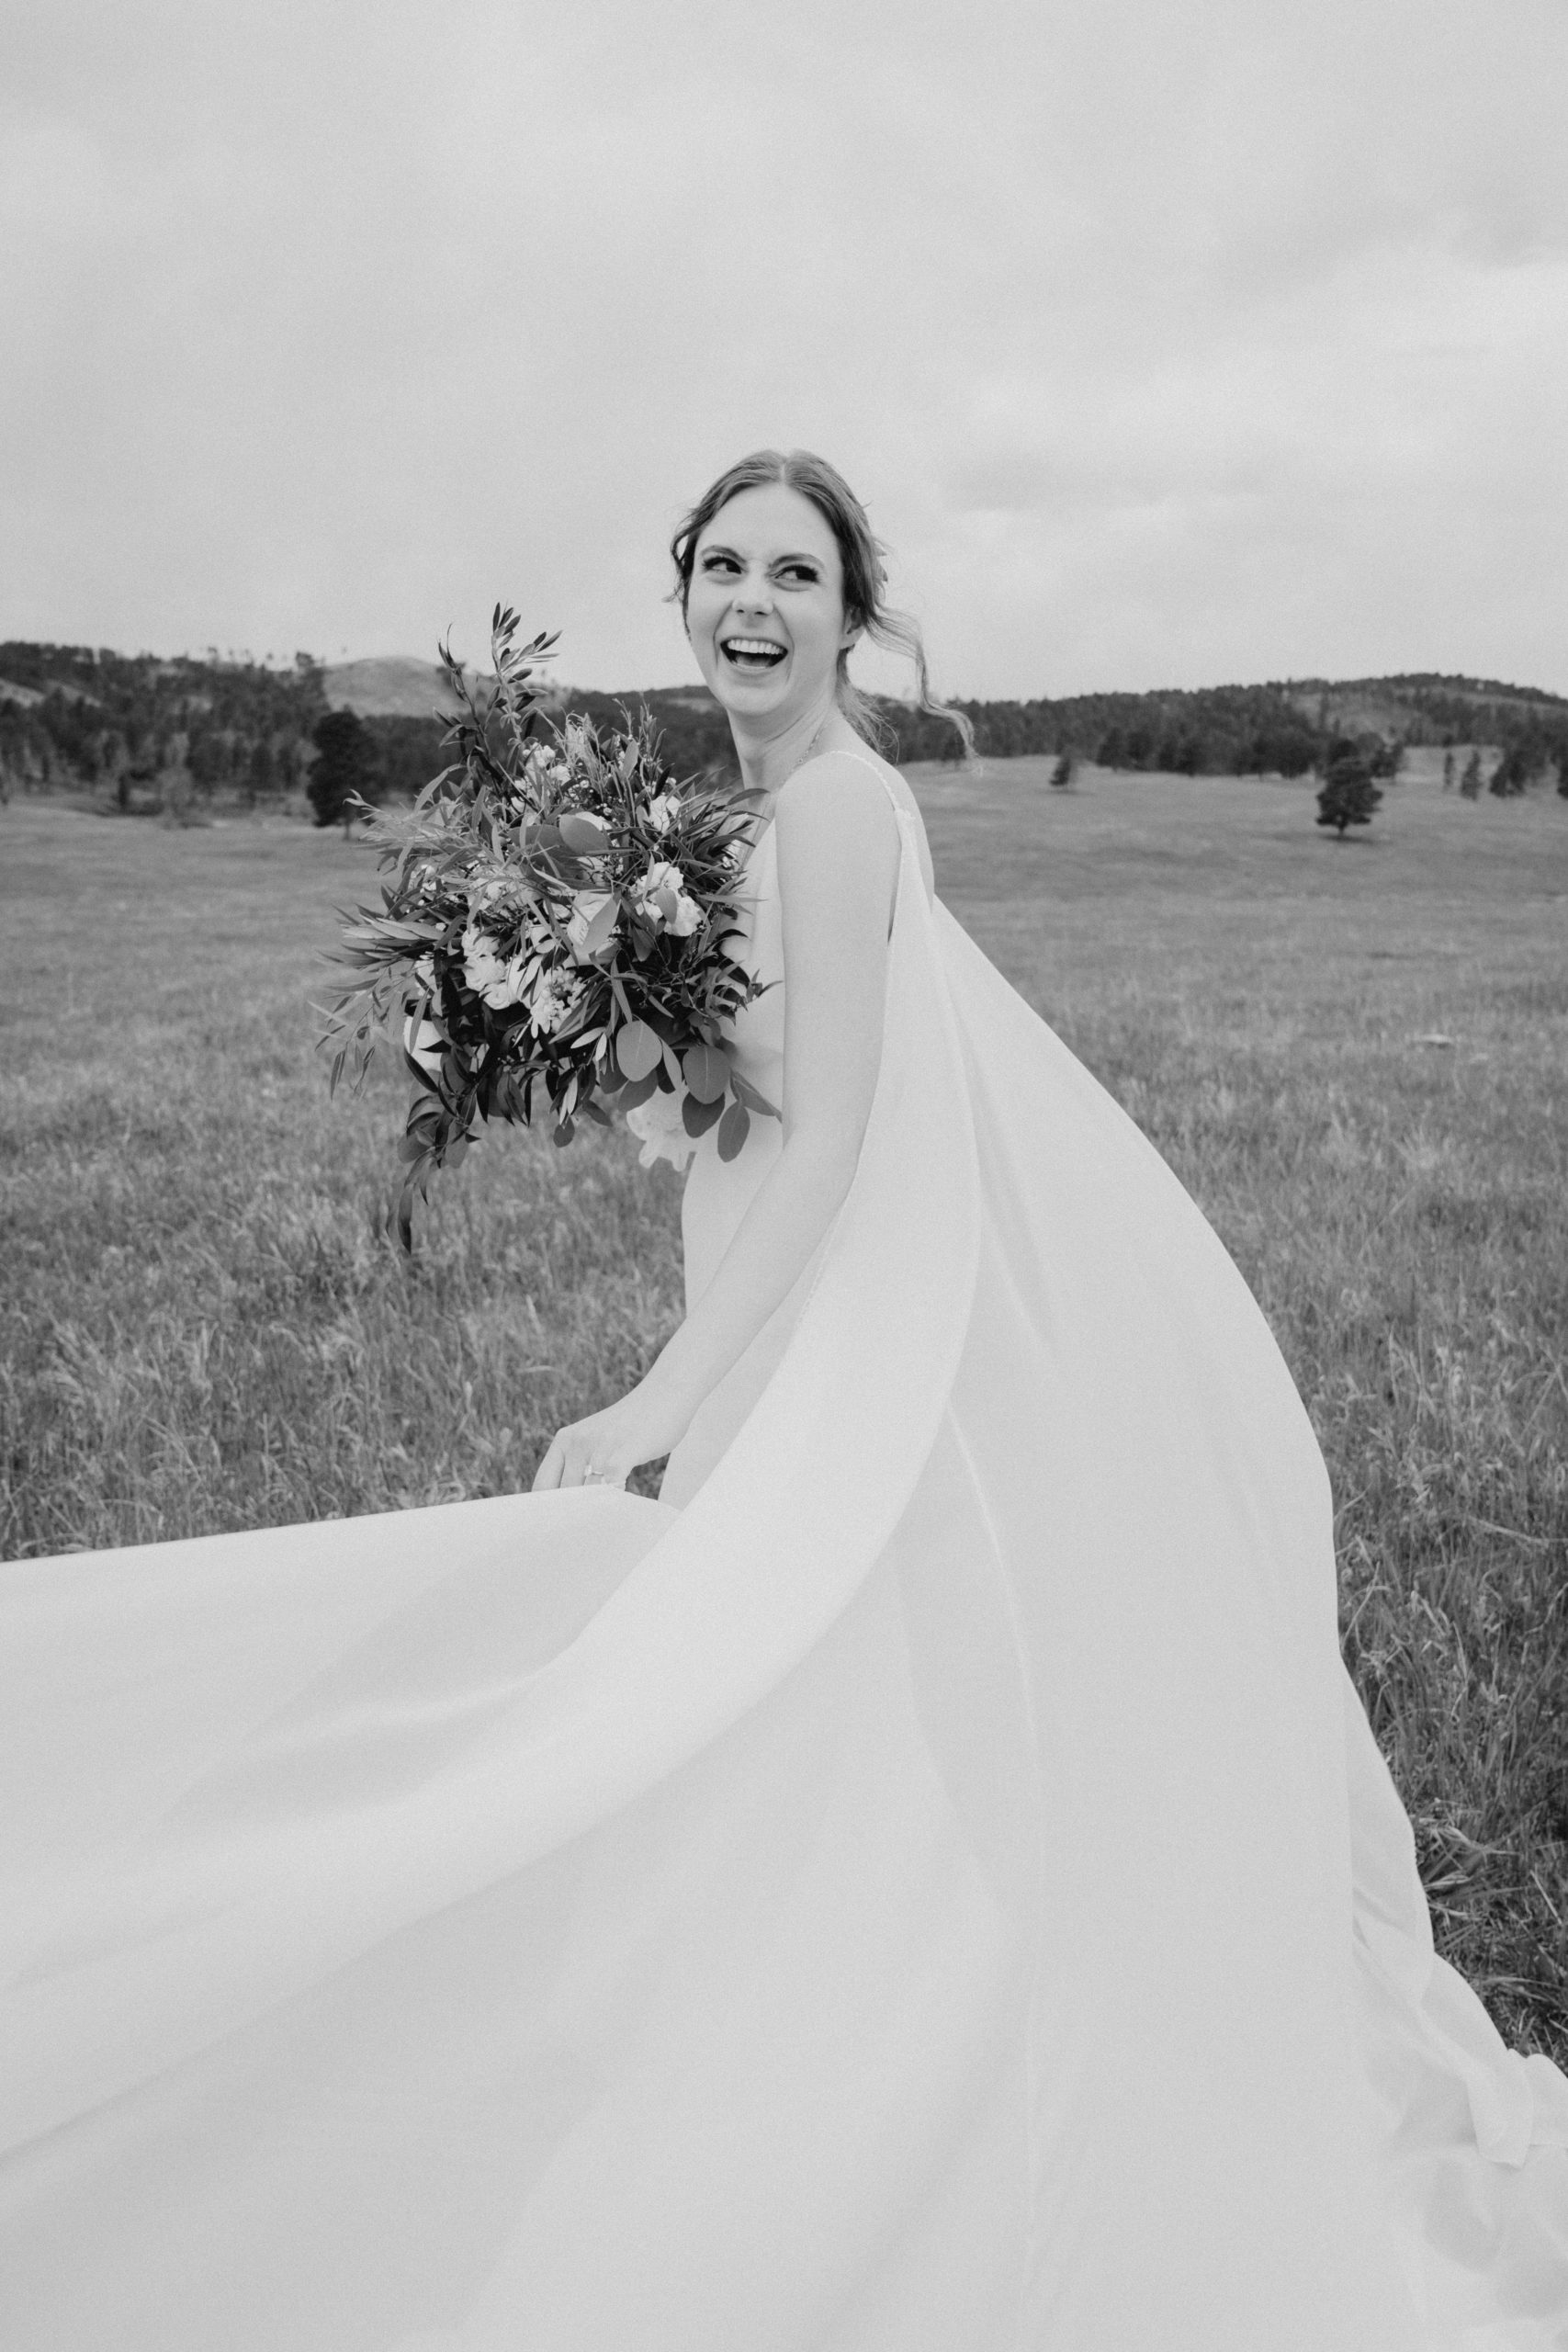 Bride smiling on her wedding day in South Dakota.